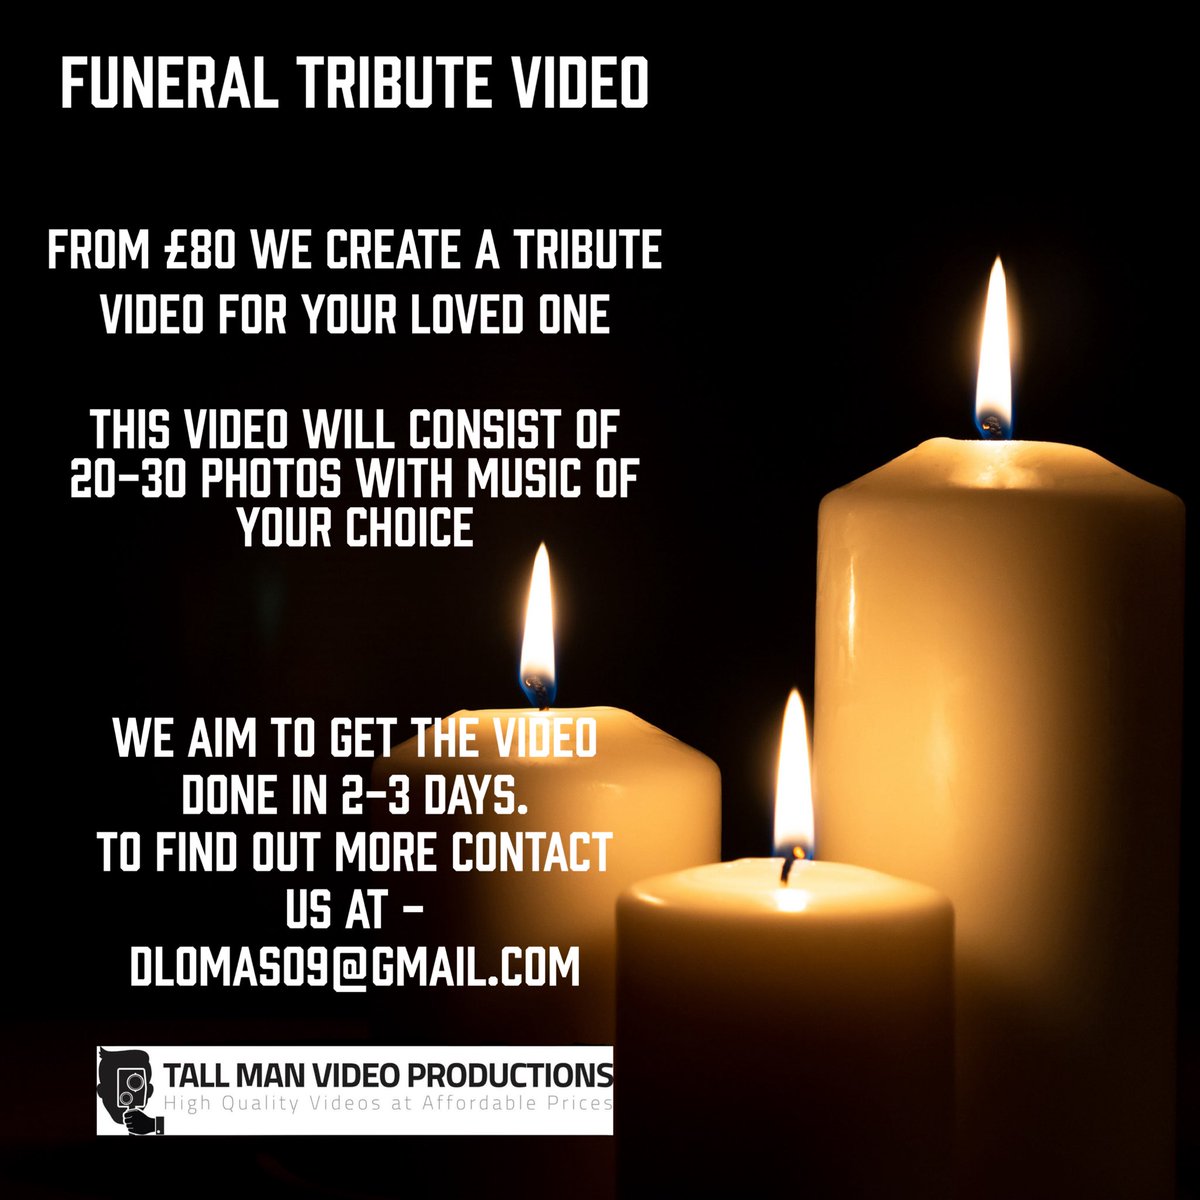 Funeral tribute video #LichfieldLocal